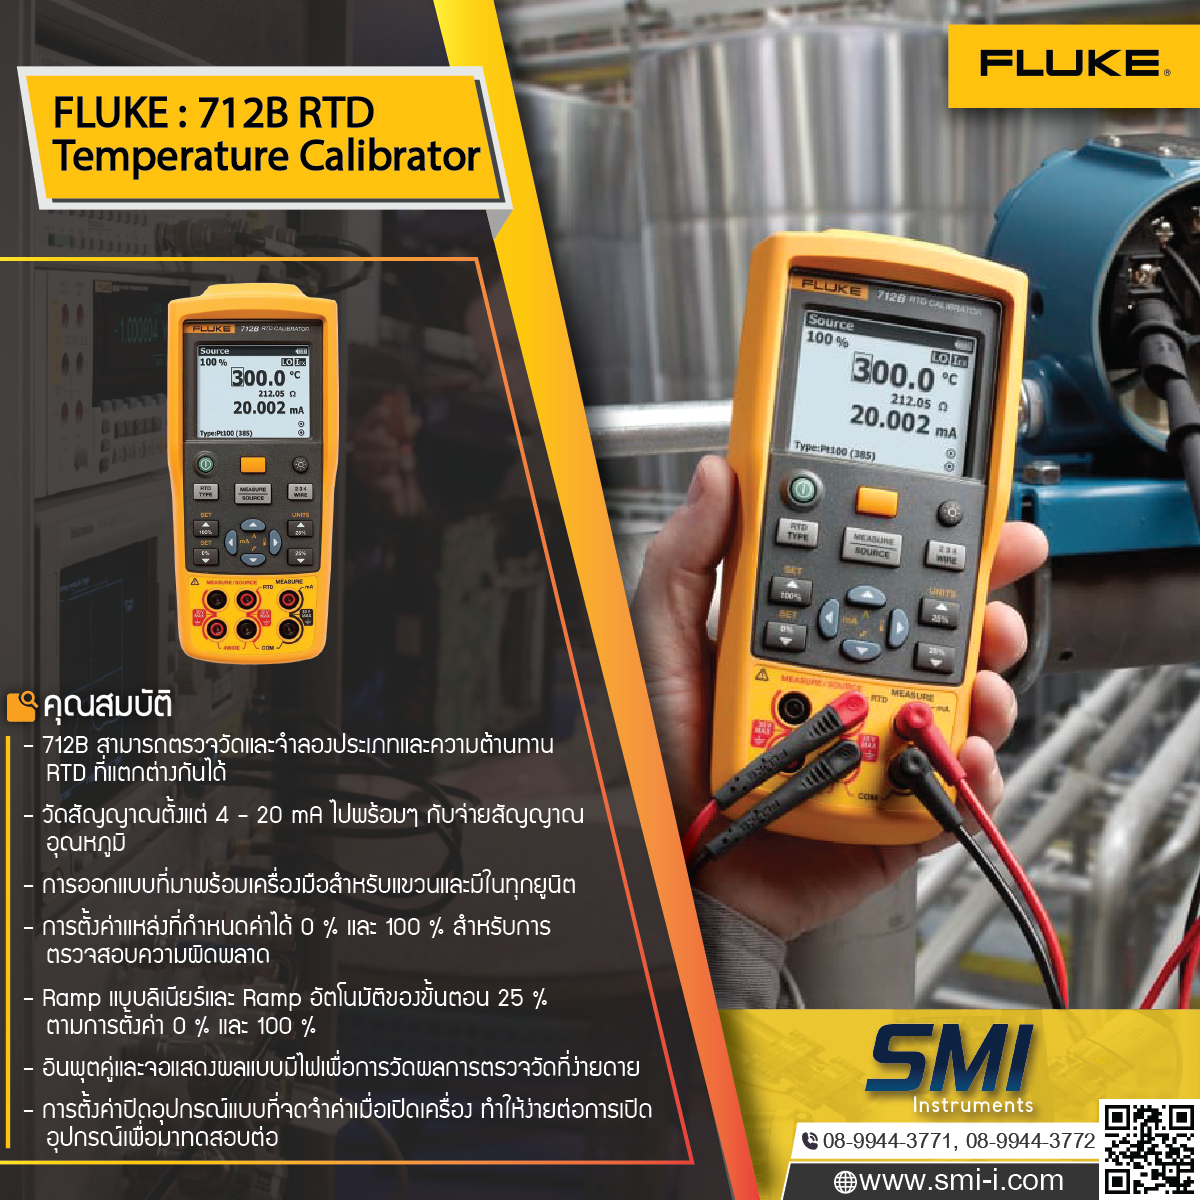 SMI info FLUKE 712B RTD Calibrator (Temperature)